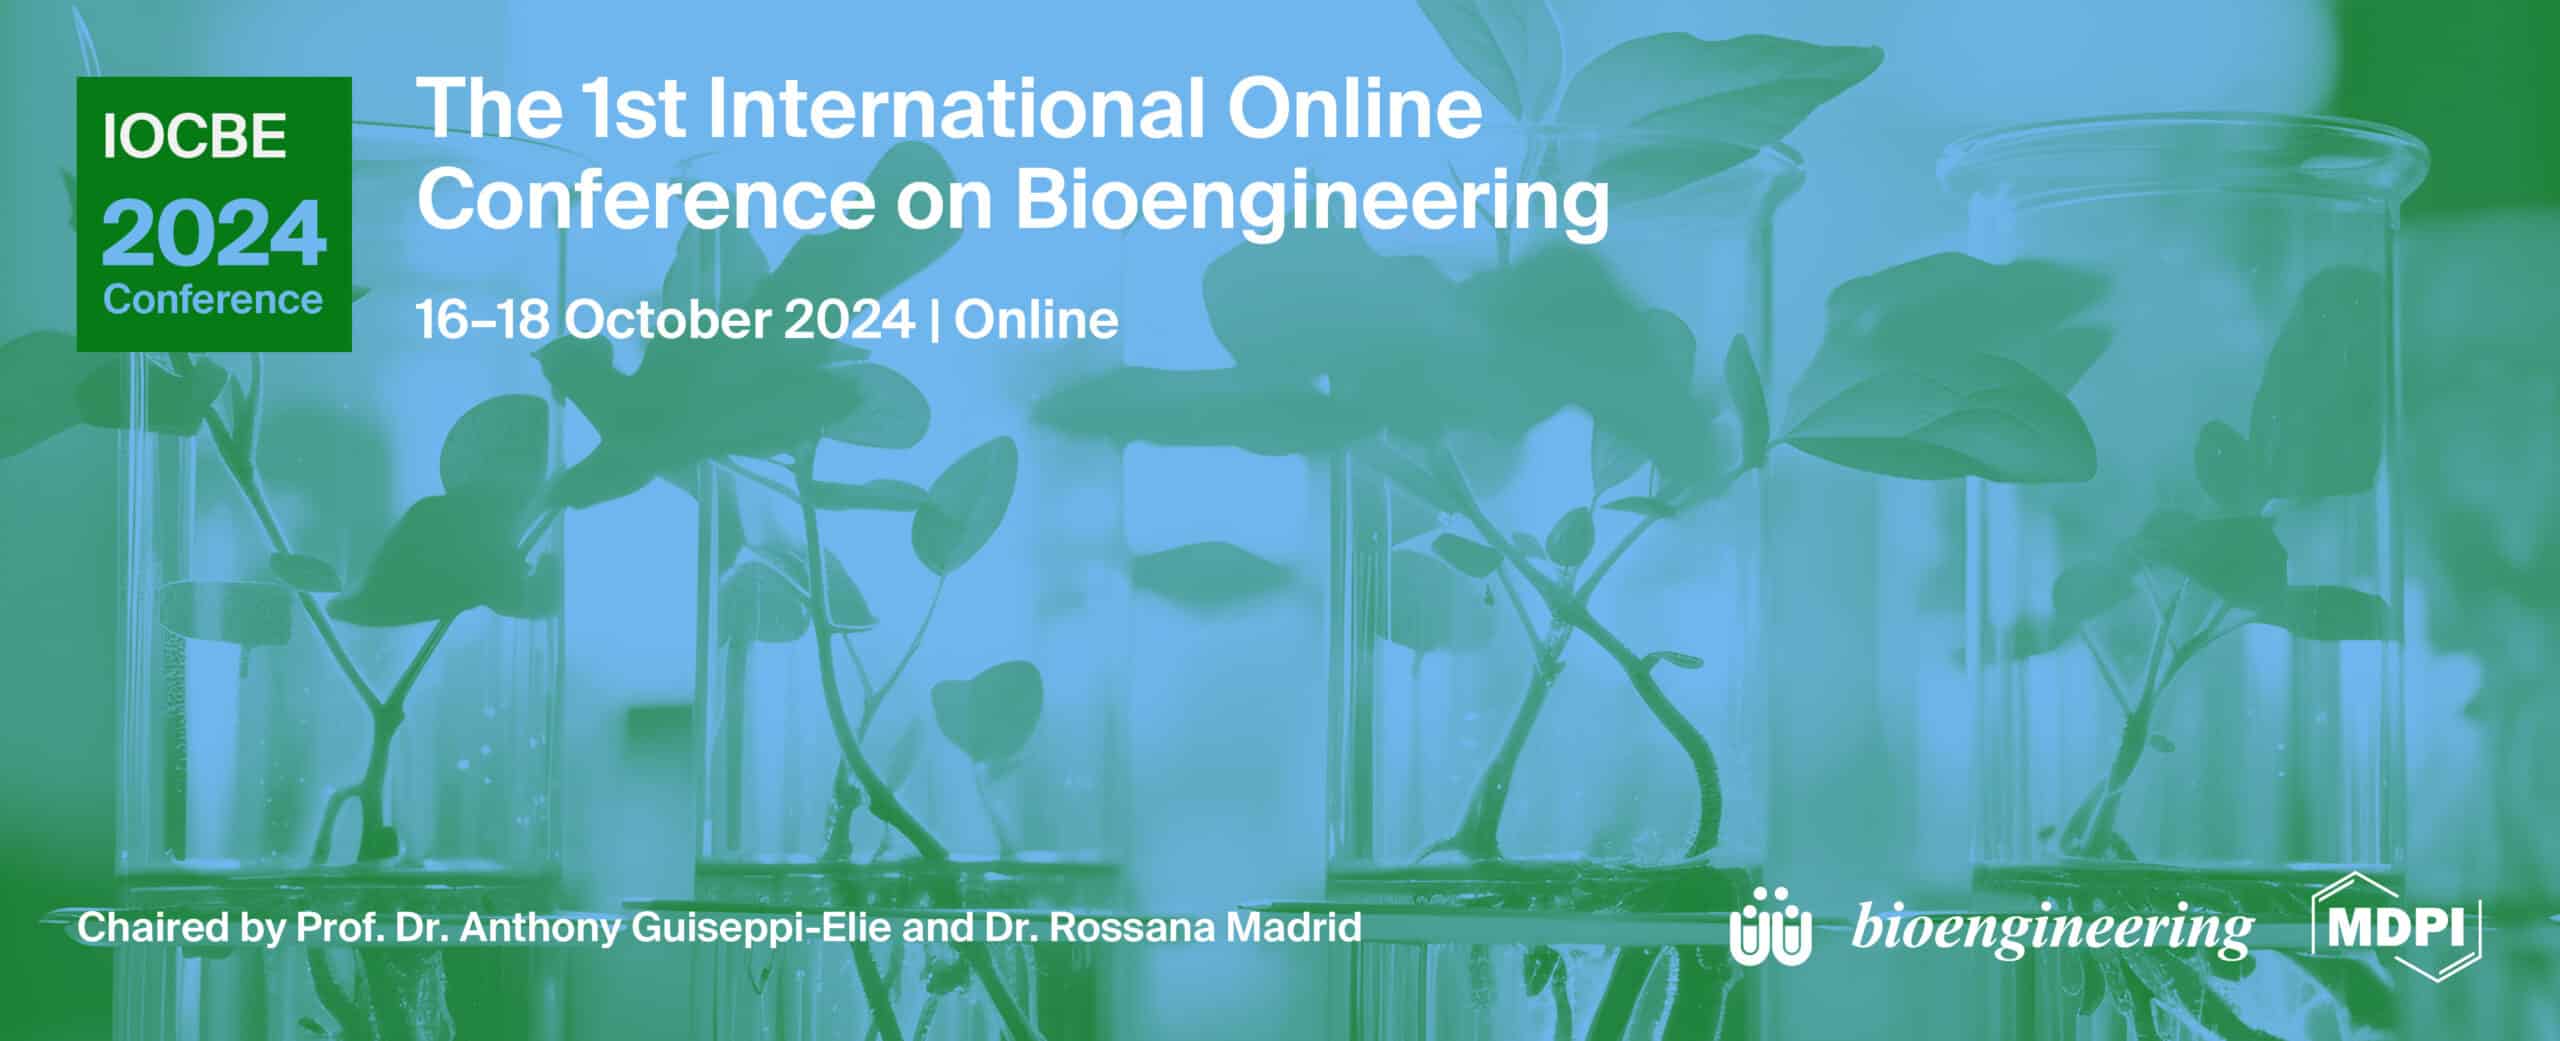 The 1st International Online Conference on Bioengineering